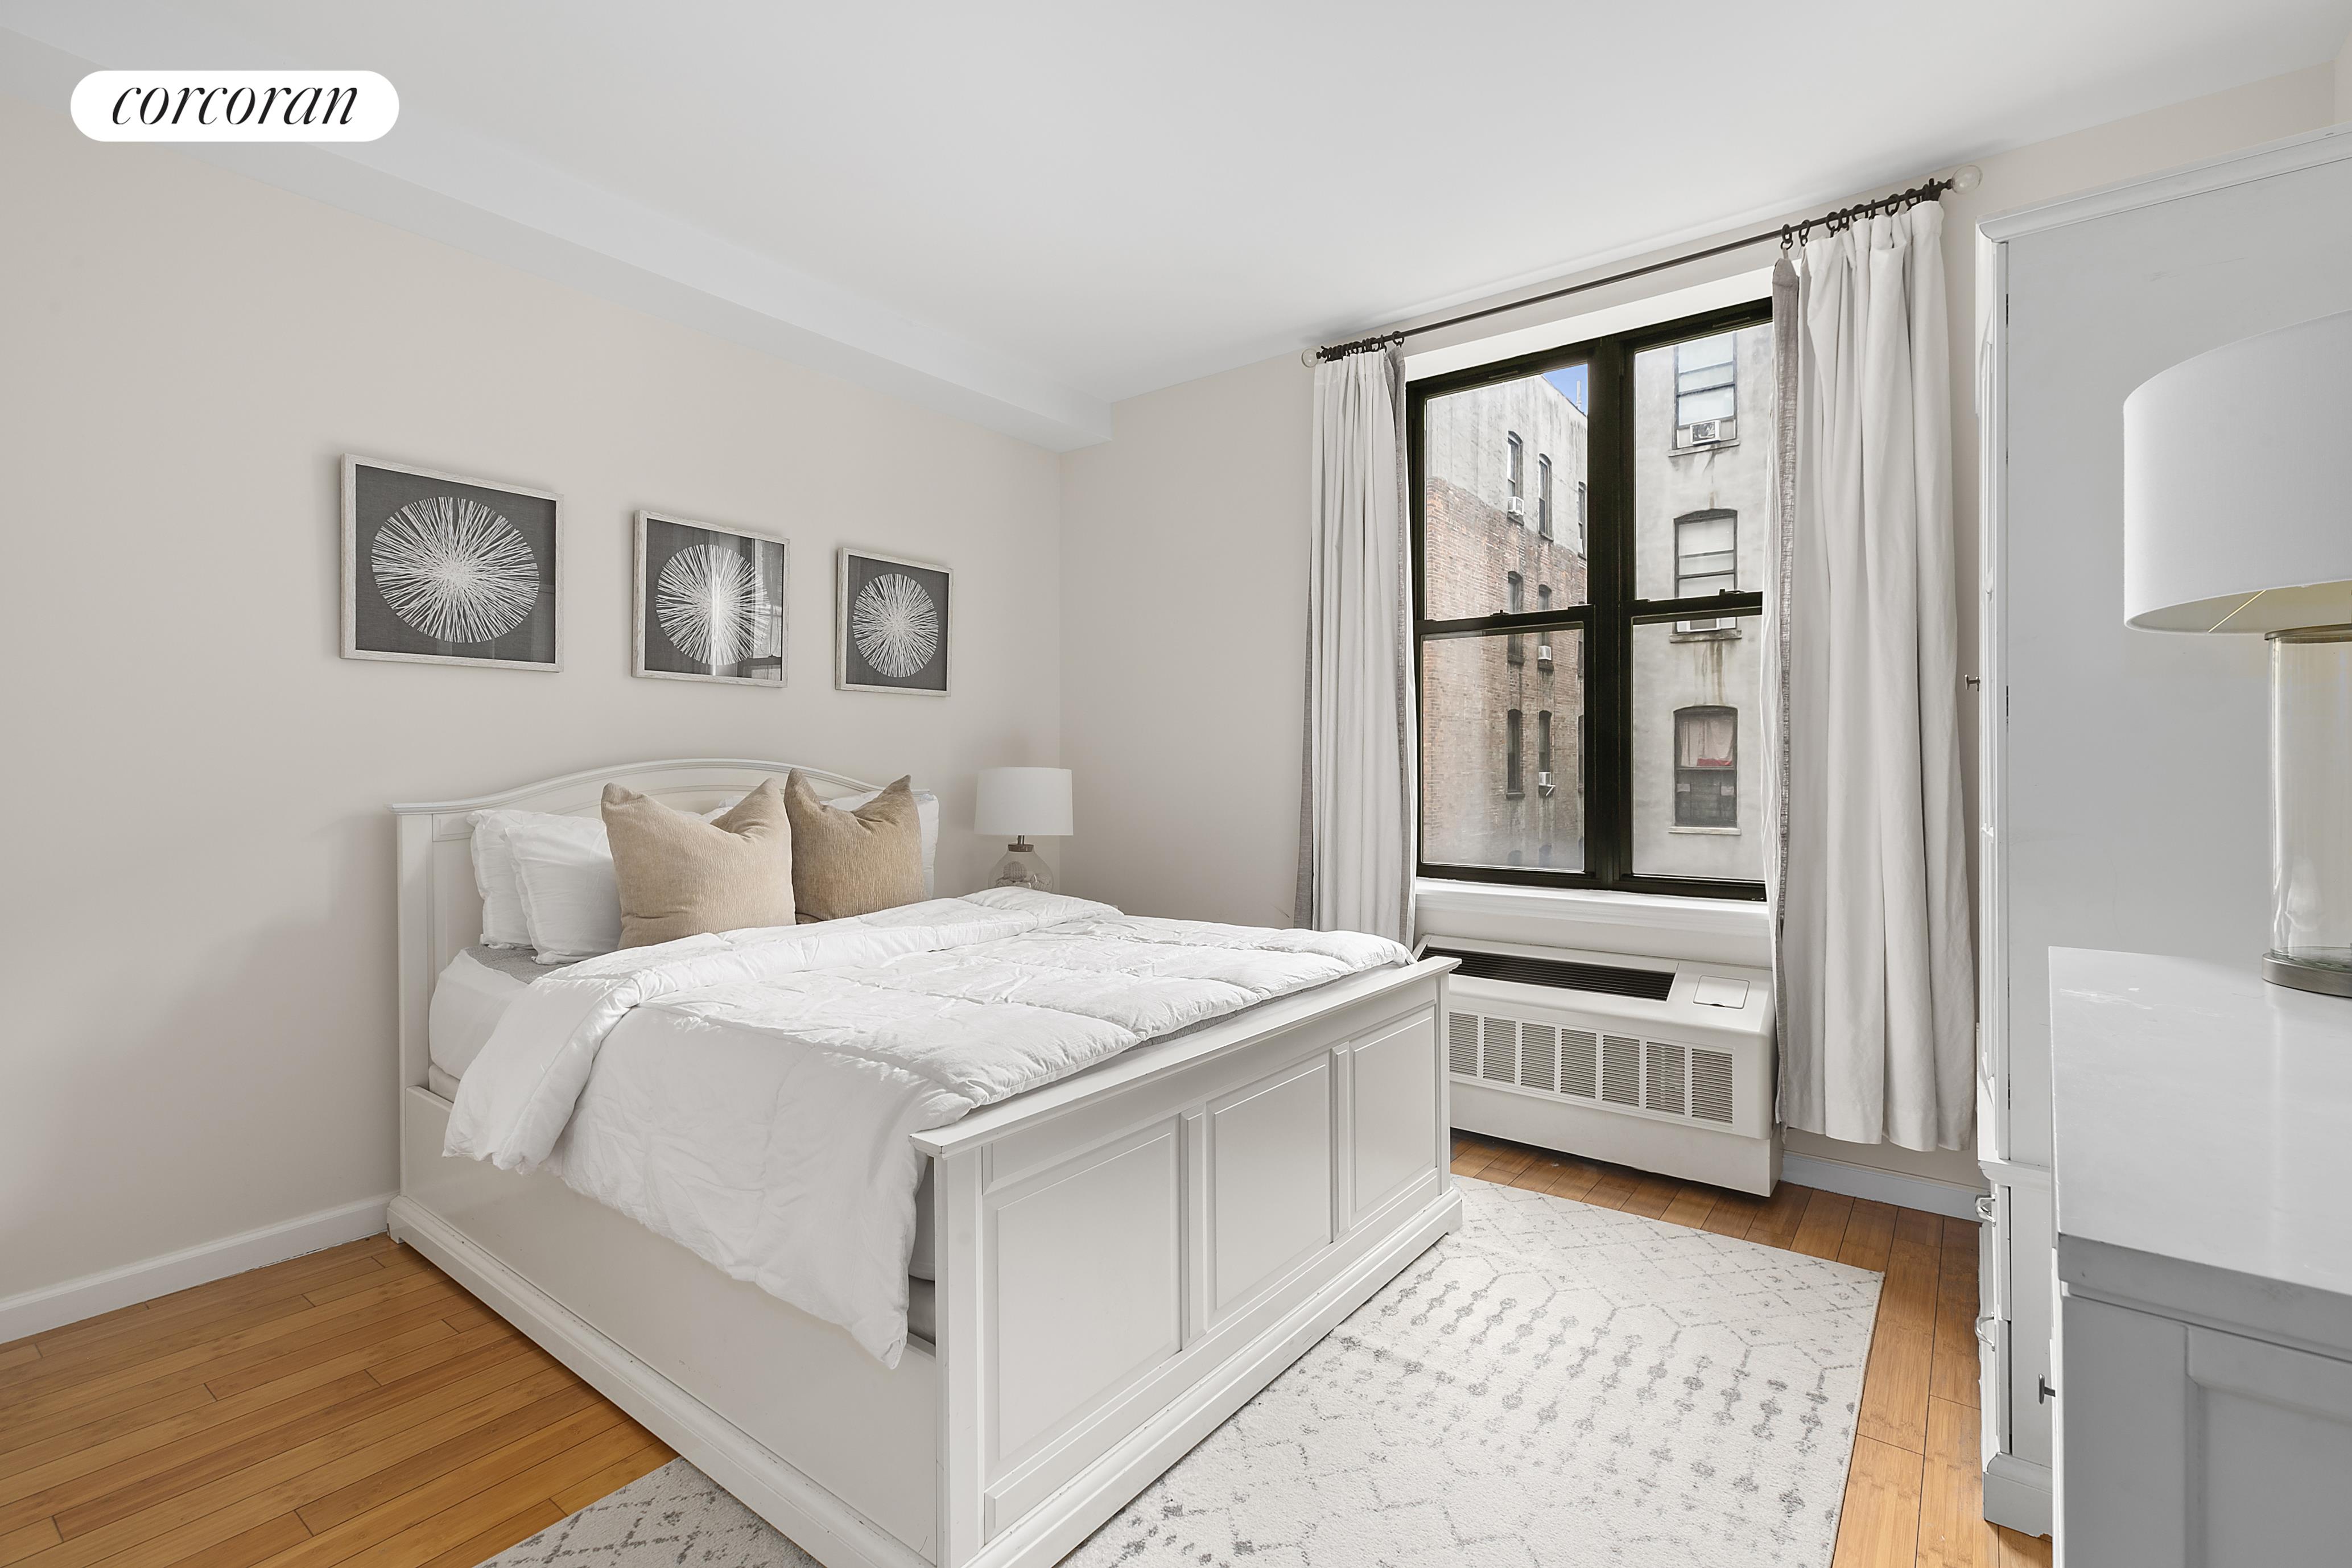 504 West 136th Street 2D, Hamilton Heights, Upper Manhattan, NYC - 2 Bedrooms  
2 Bathrooms  
4 Rooms - 